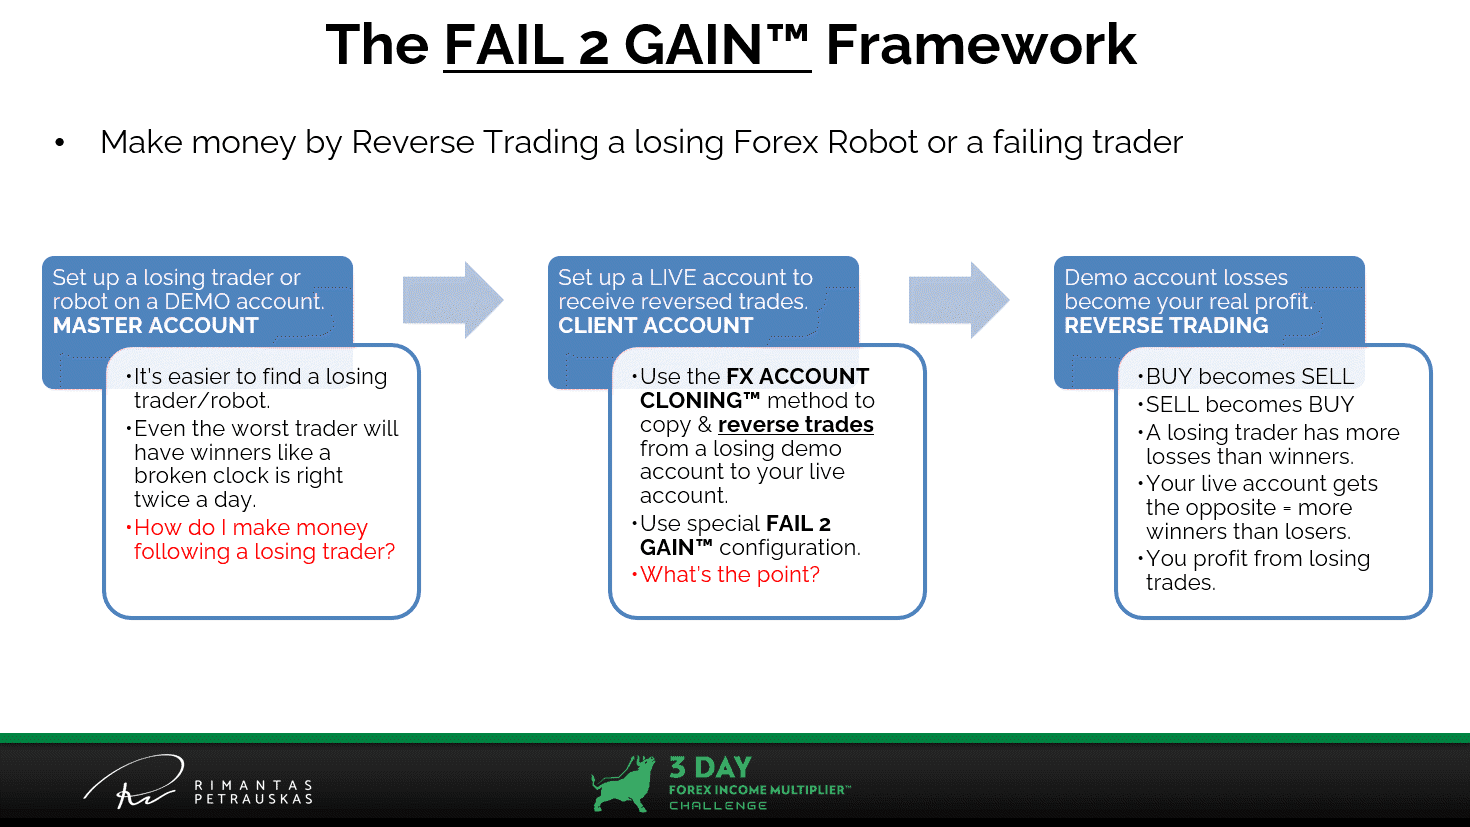 The Fail 2 Gain™ framework in a nutshell